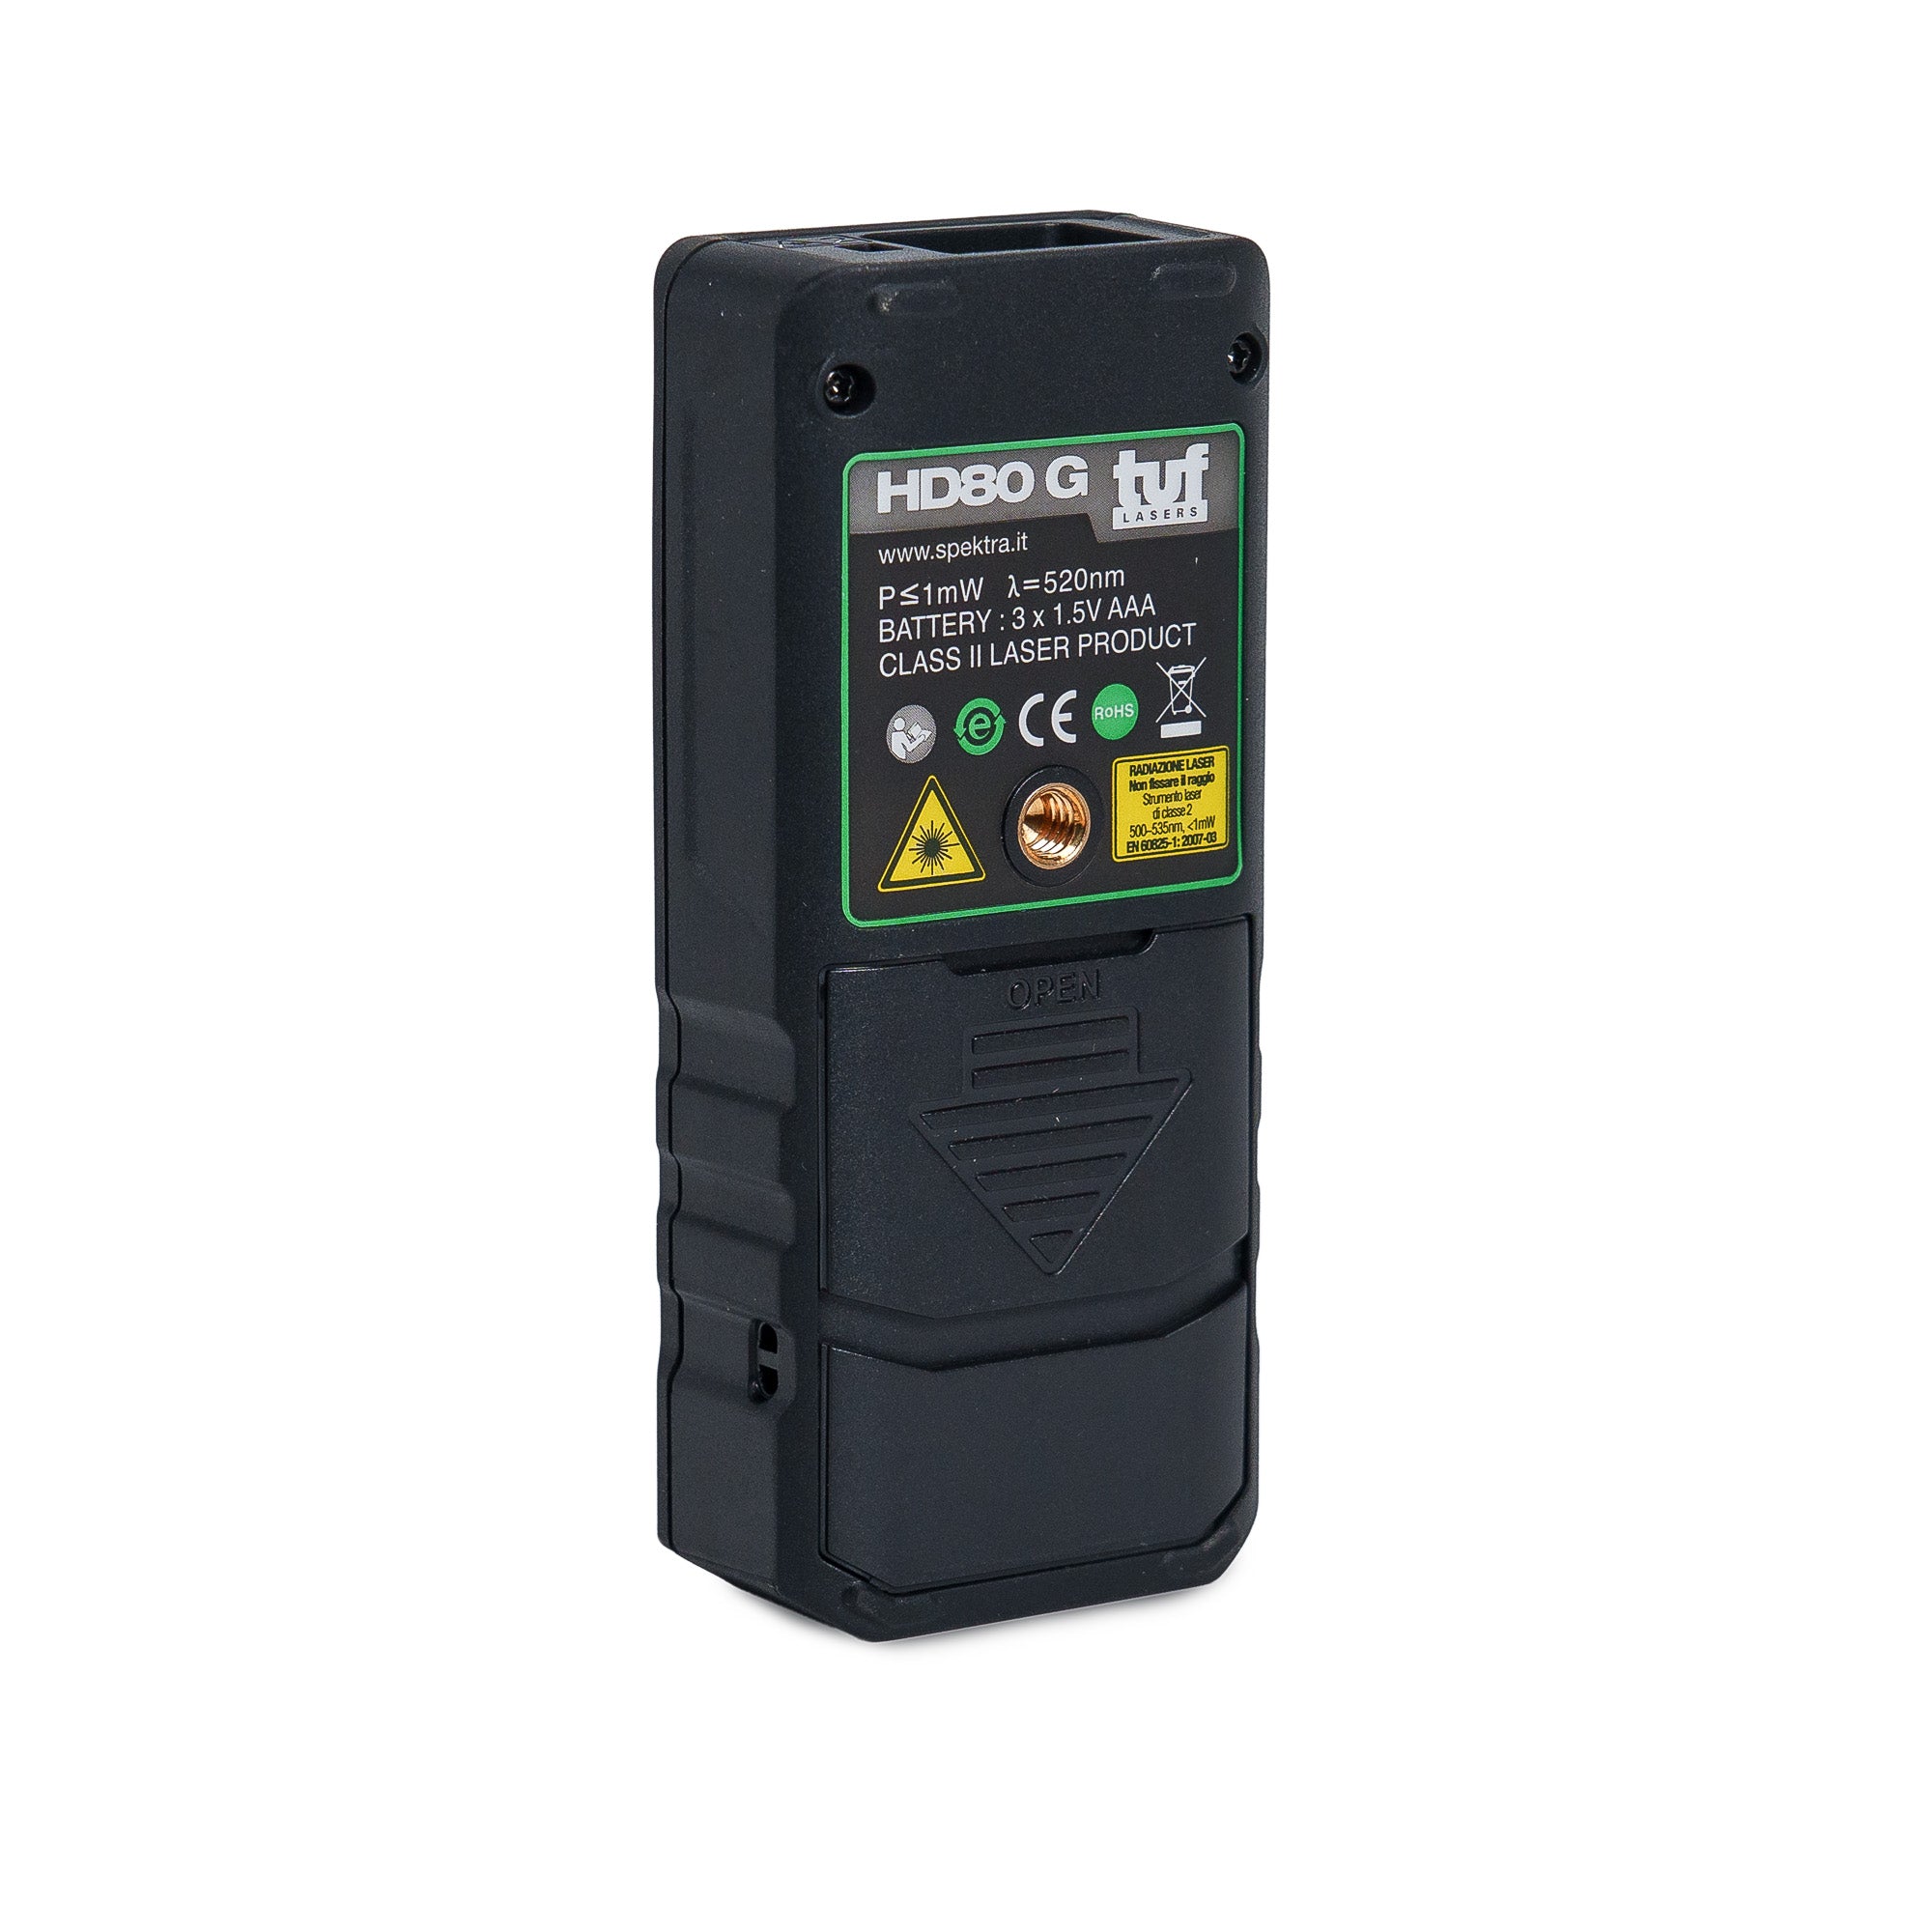 Misuratore laser HD 80 G